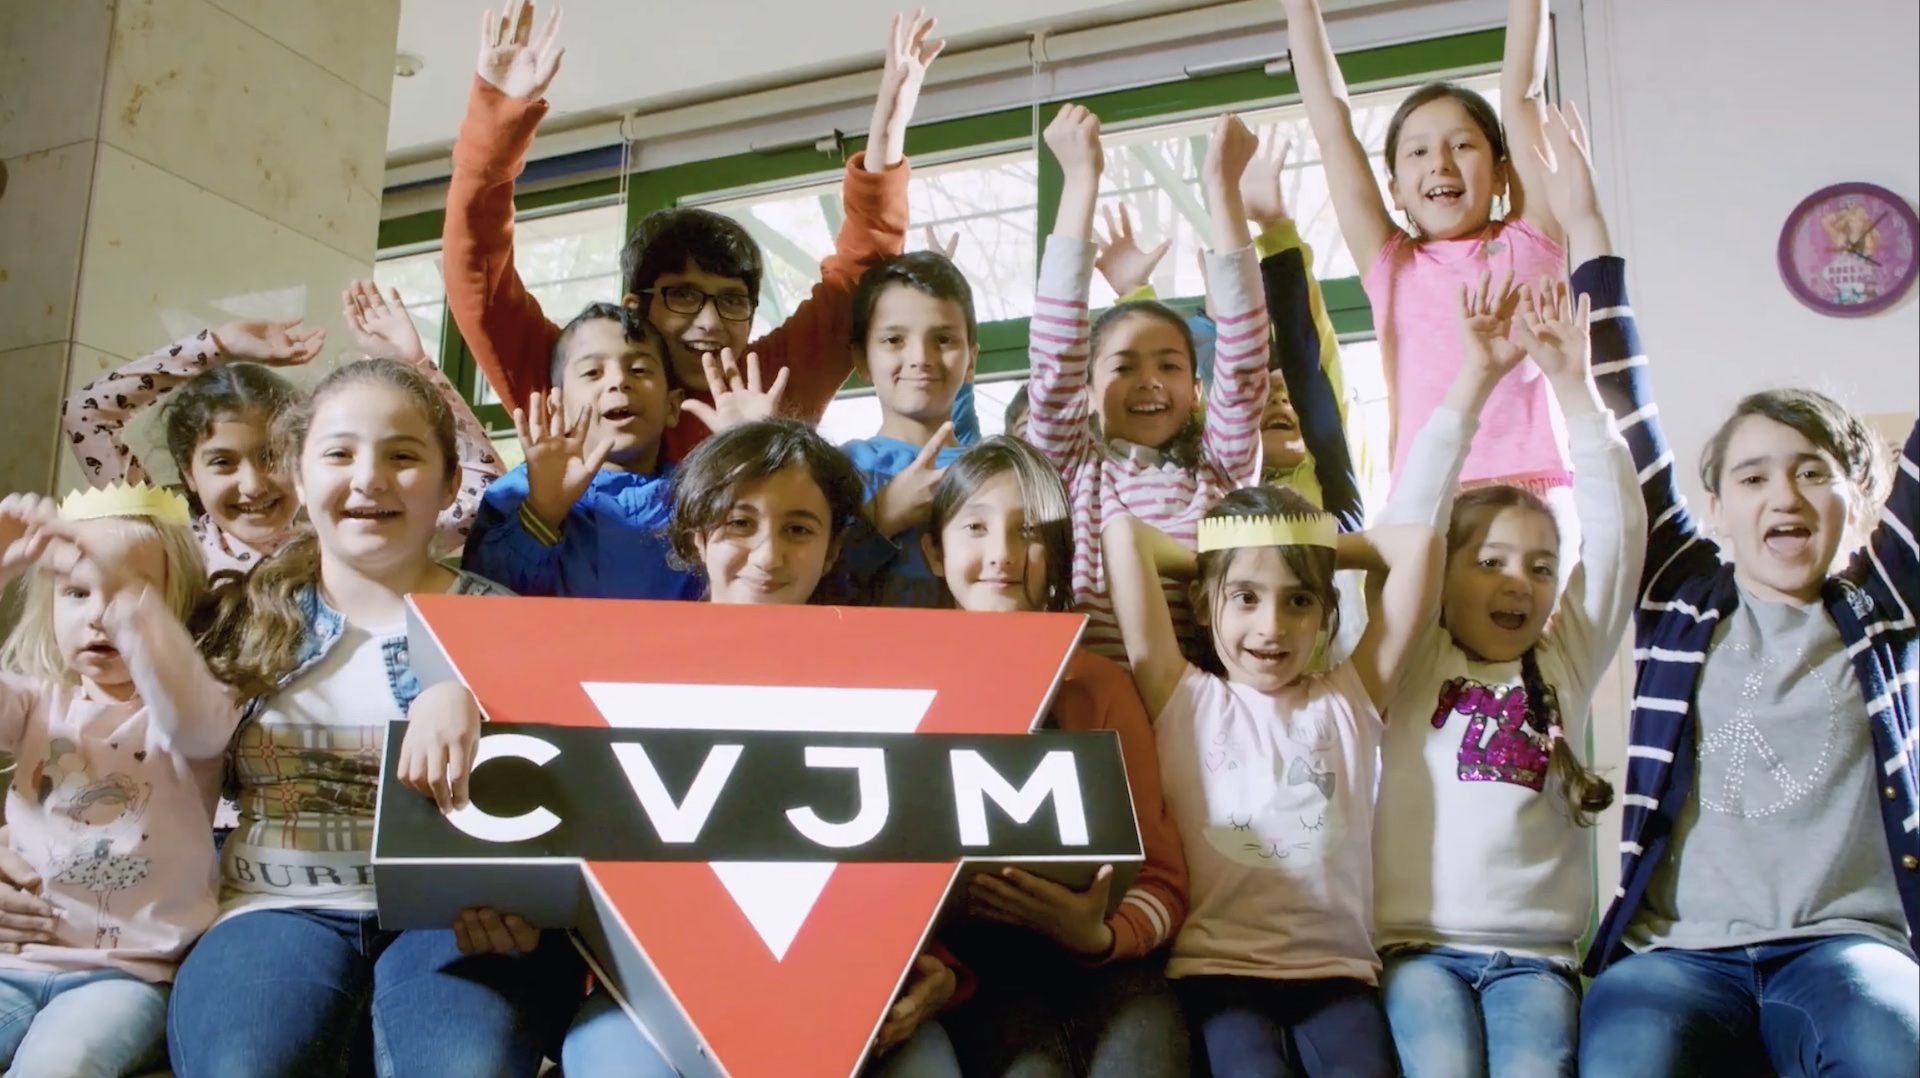 Video, welches den CVJM erklärt